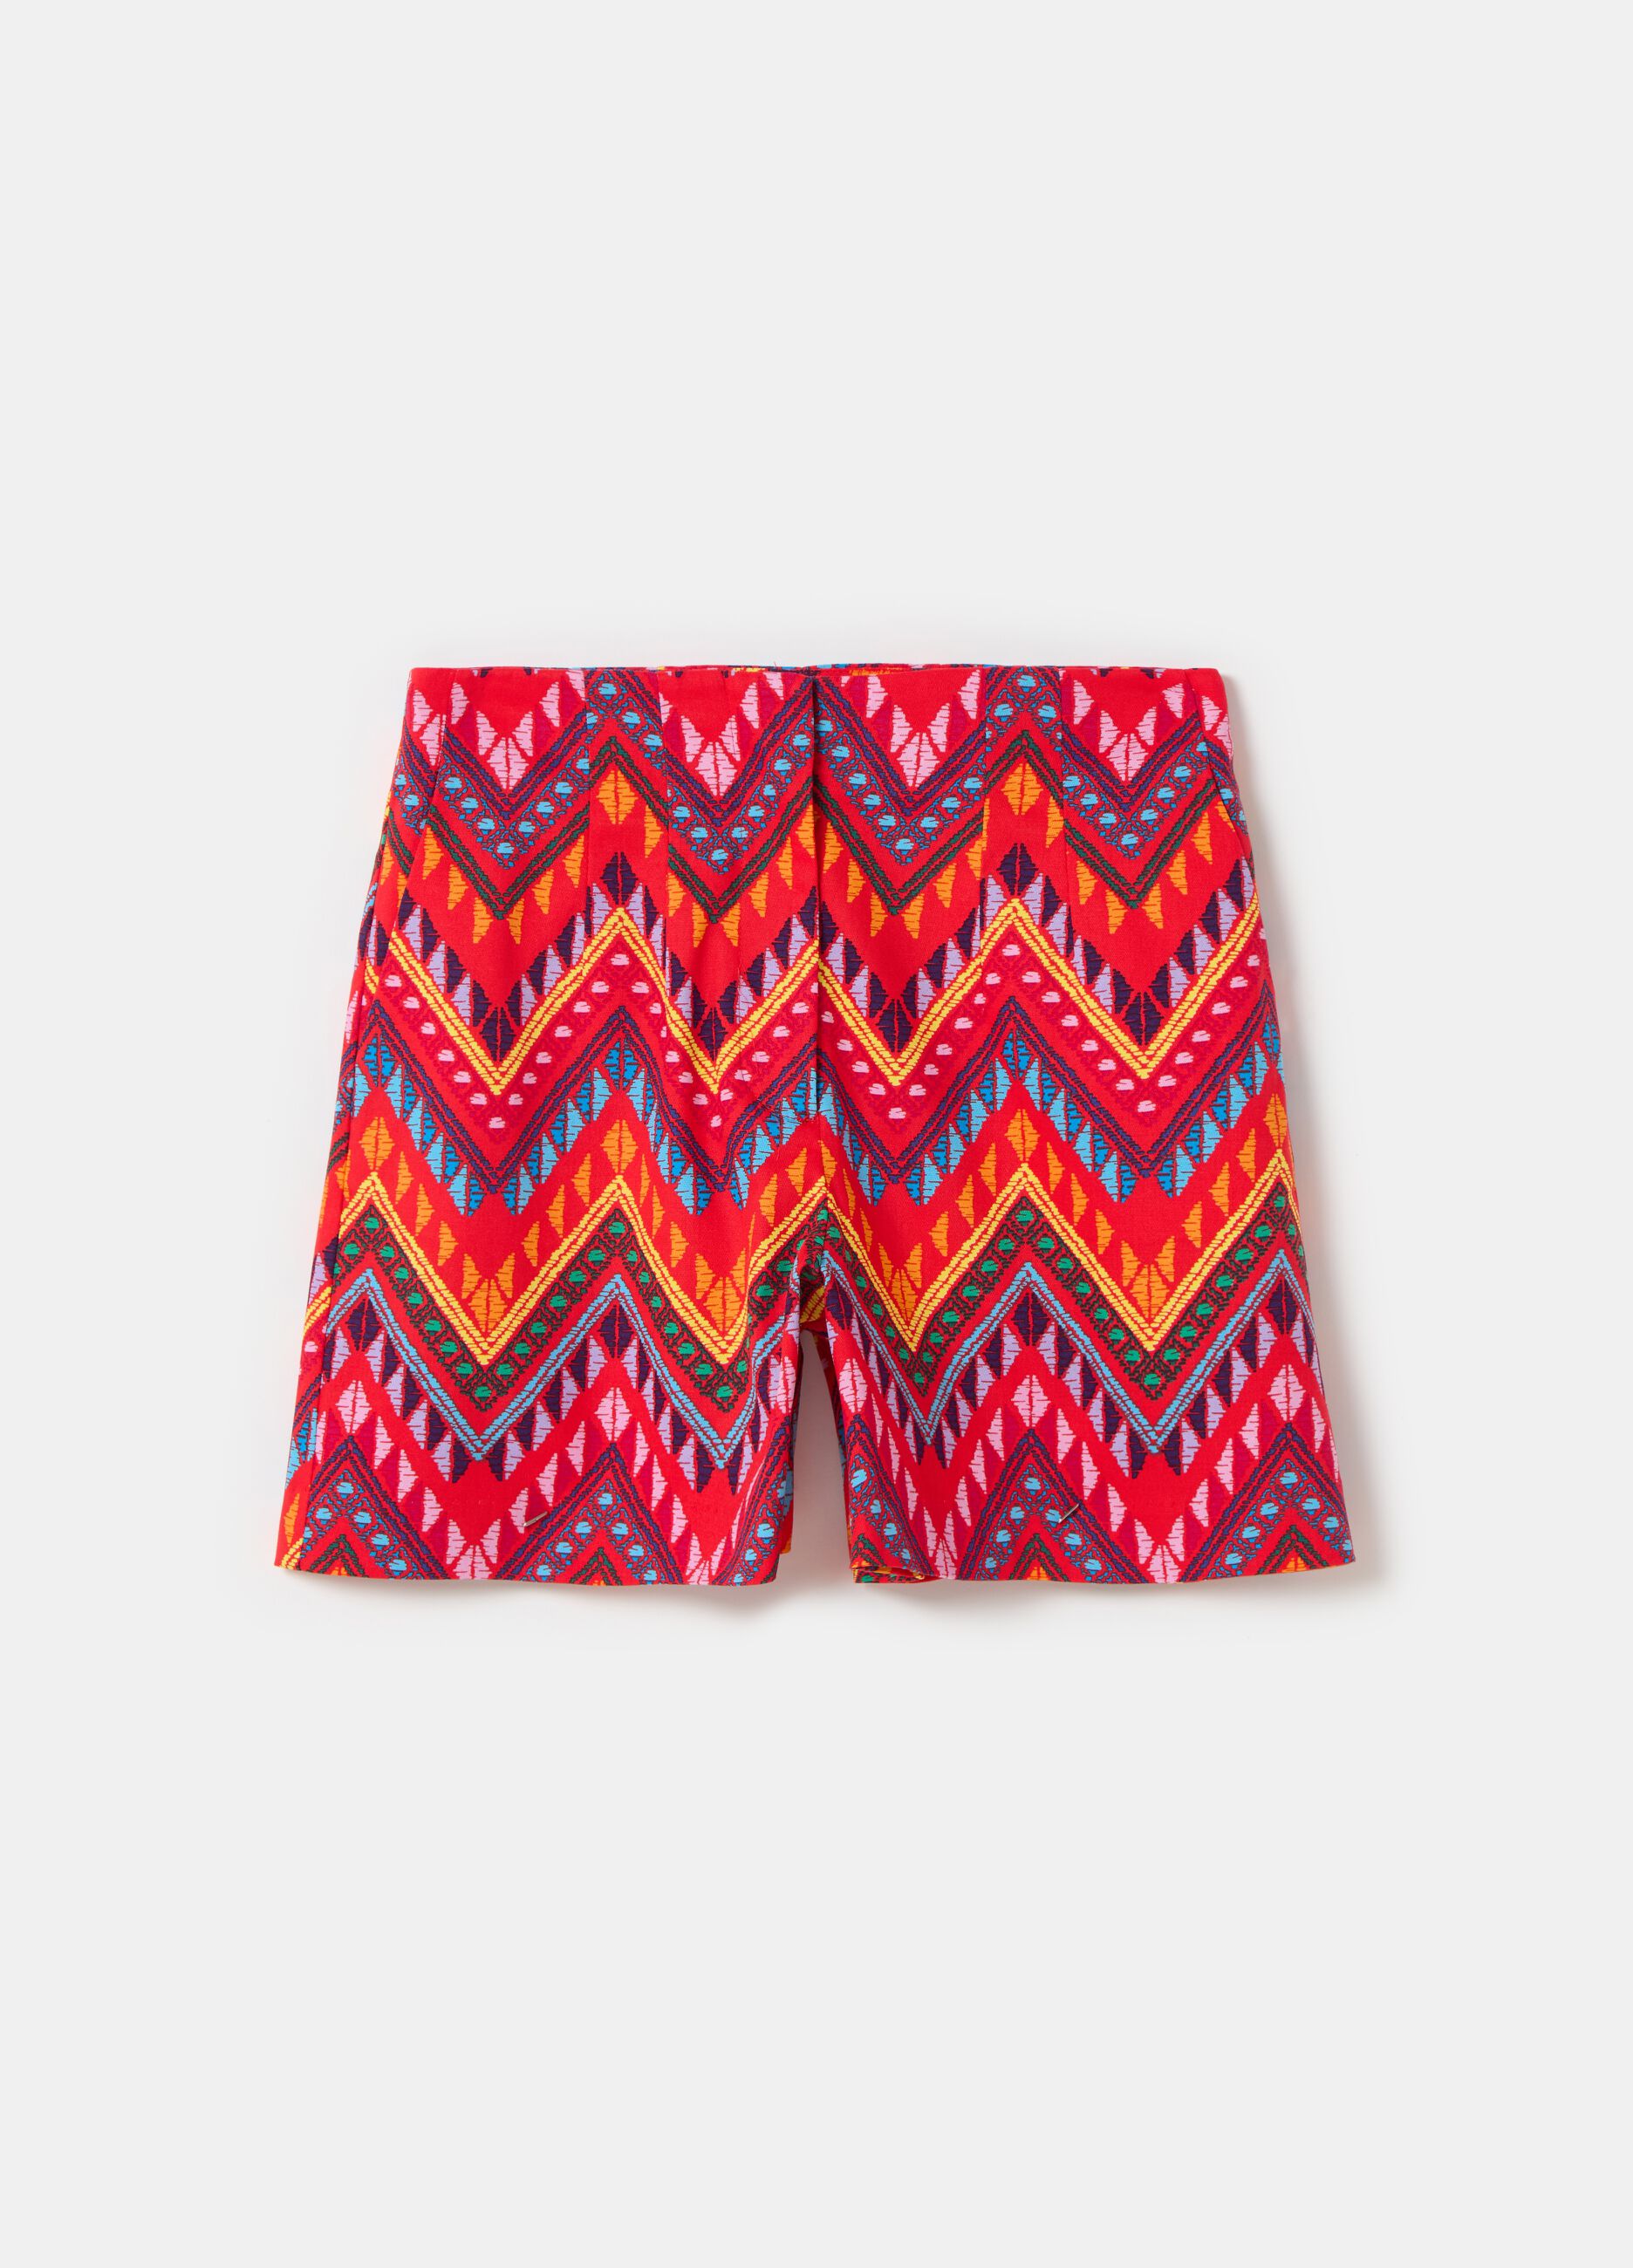 Shorts in multicoloured ethnic print